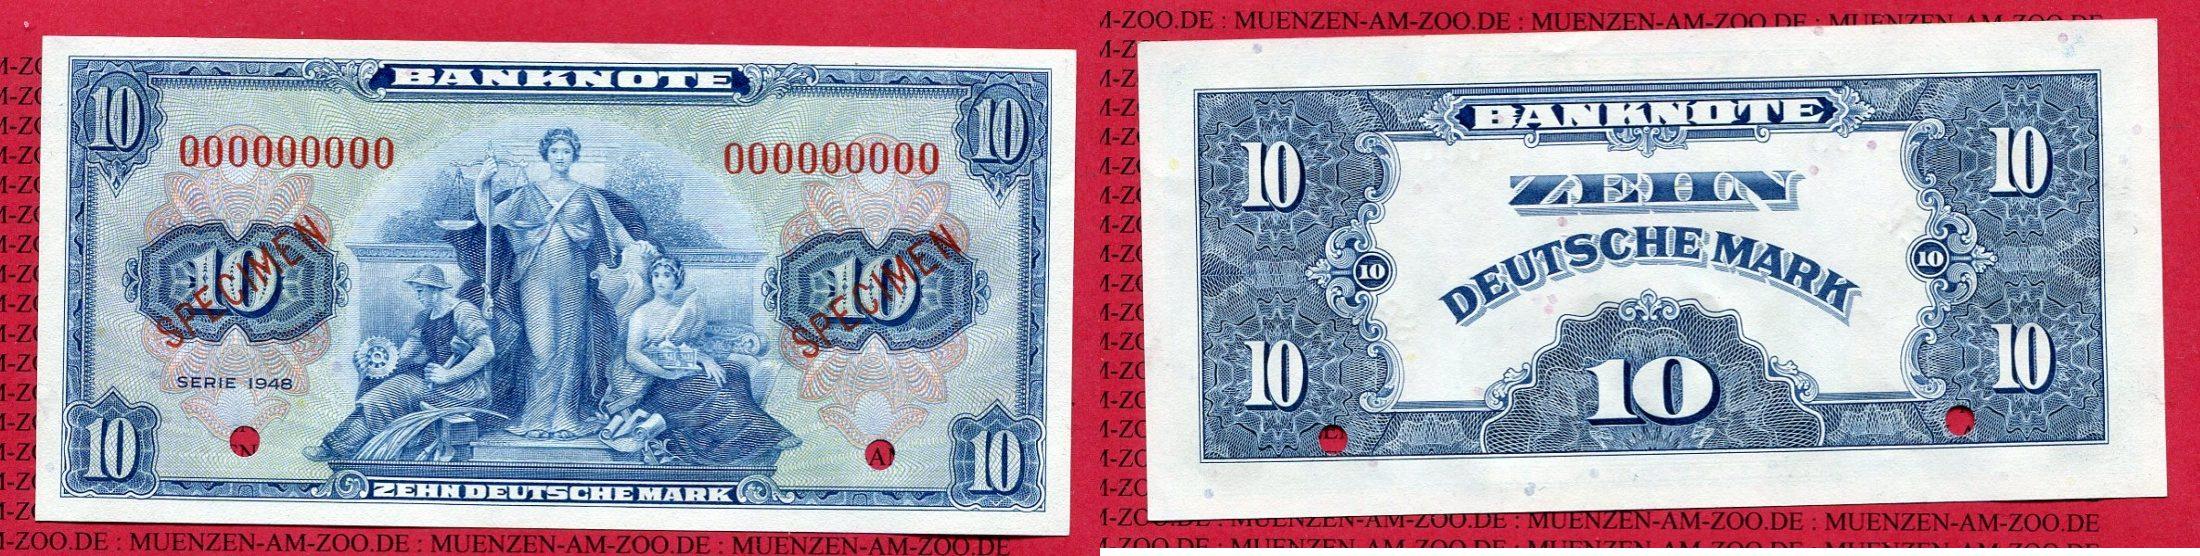 Foto Bundesrepublik Deutschland Berlin 10 Dm Deutsche Mark Kopfgeld Specime